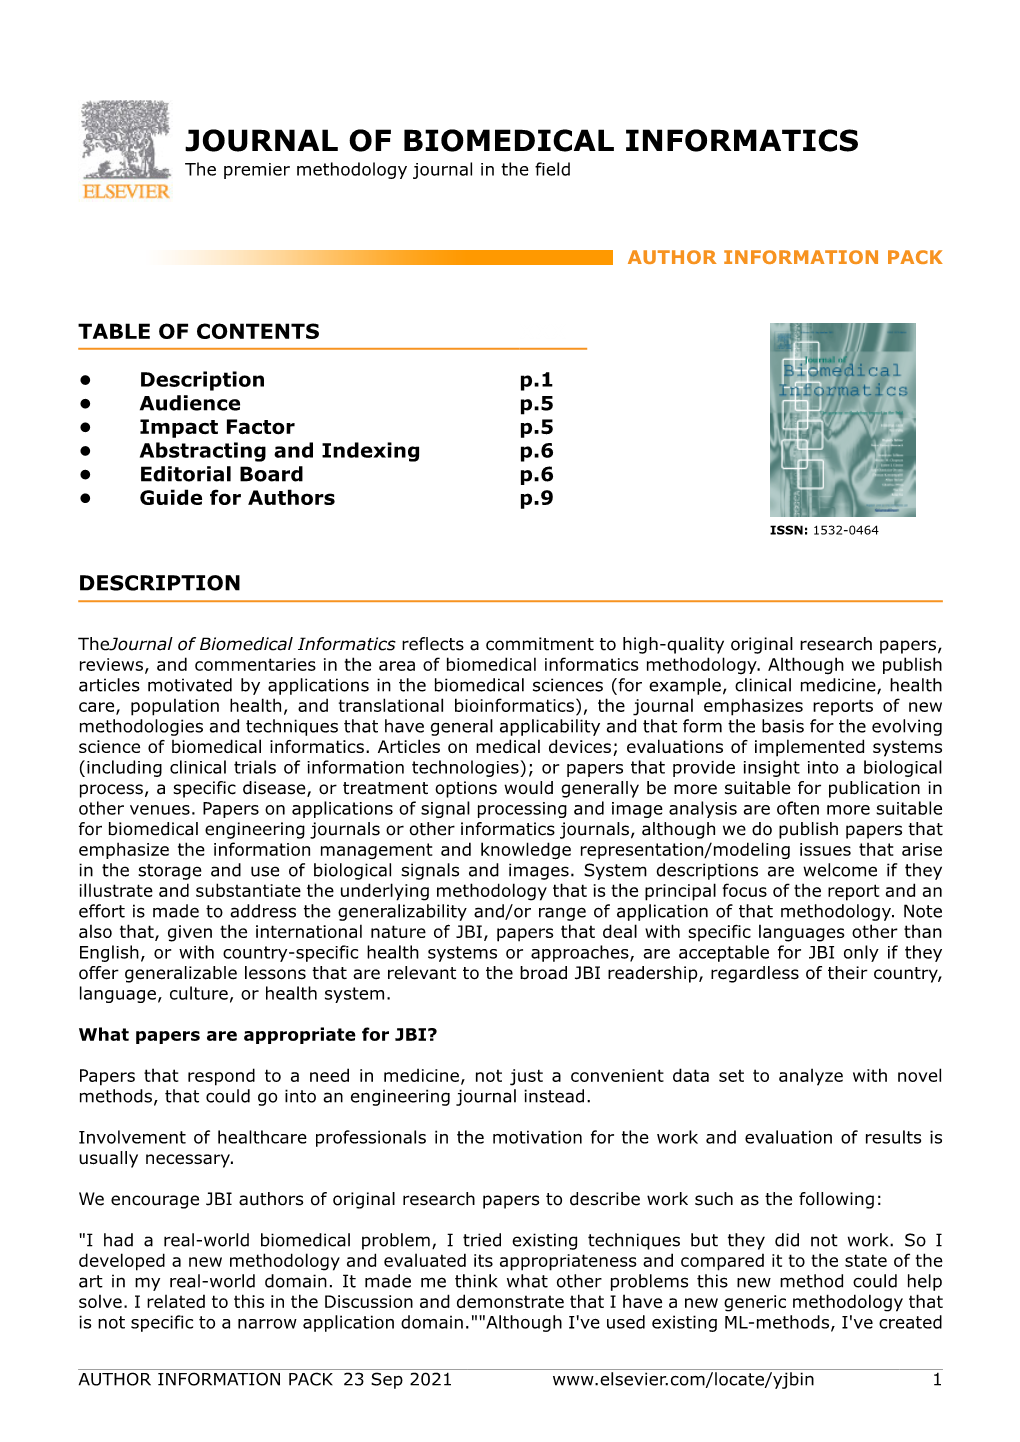 JOURNAL of BIOMEDICAL INFORMATICS the Premier Methodology Journal in the Field